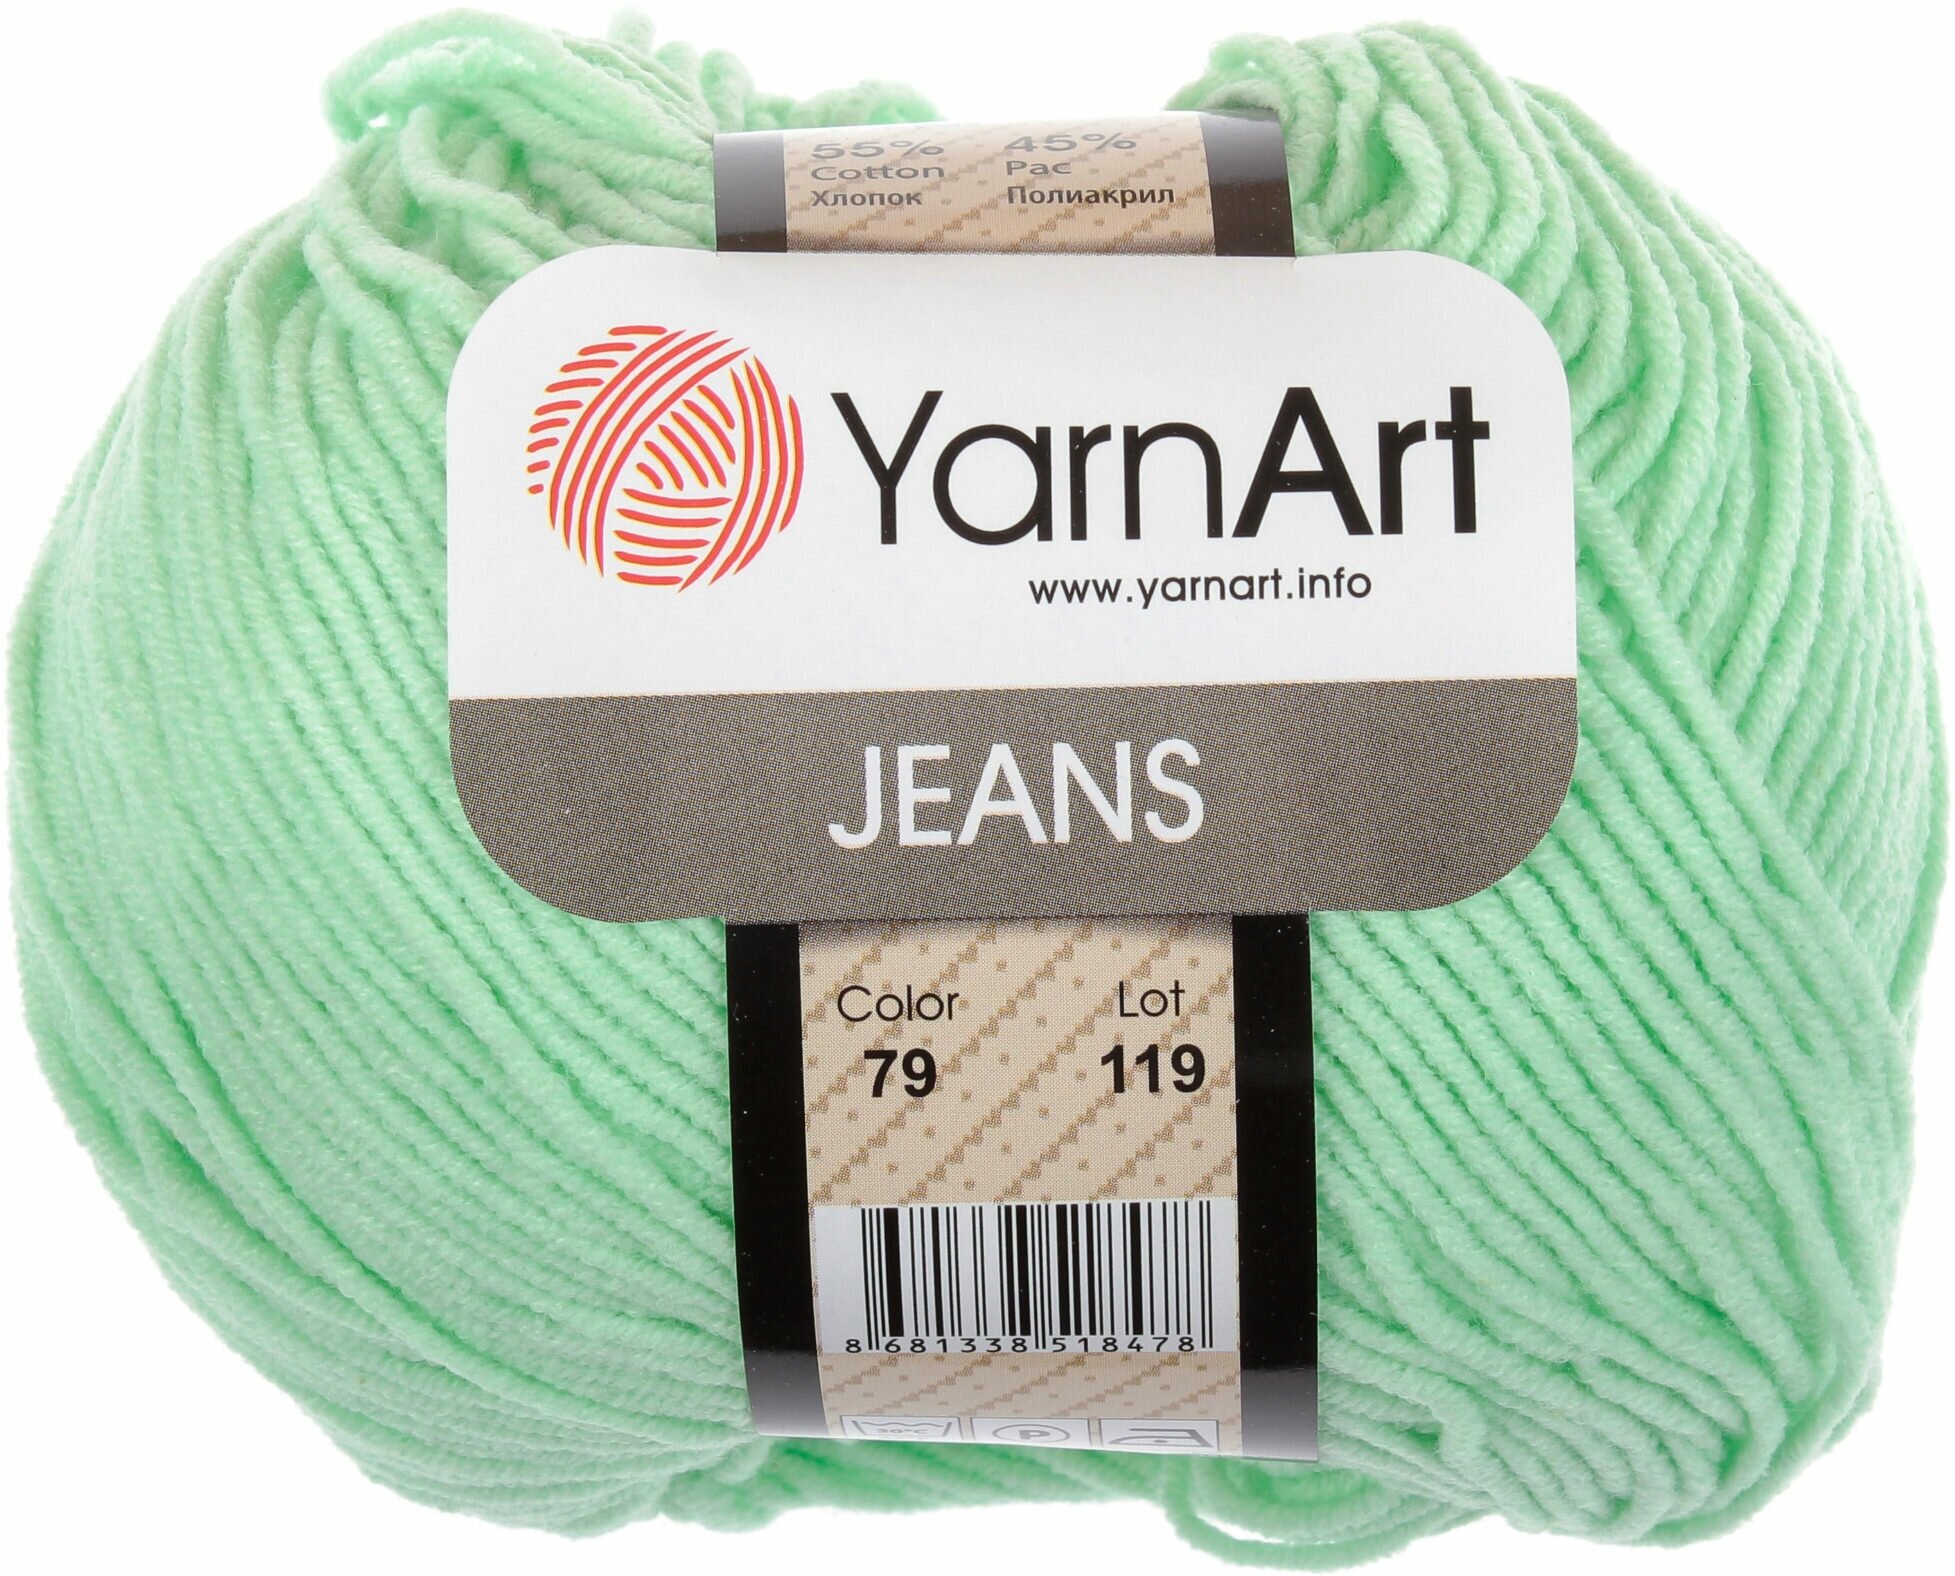 Пряжа YarnArt Jeans мята (79), 55%хлопок/45%акрил, 160м, 50г, 3шт